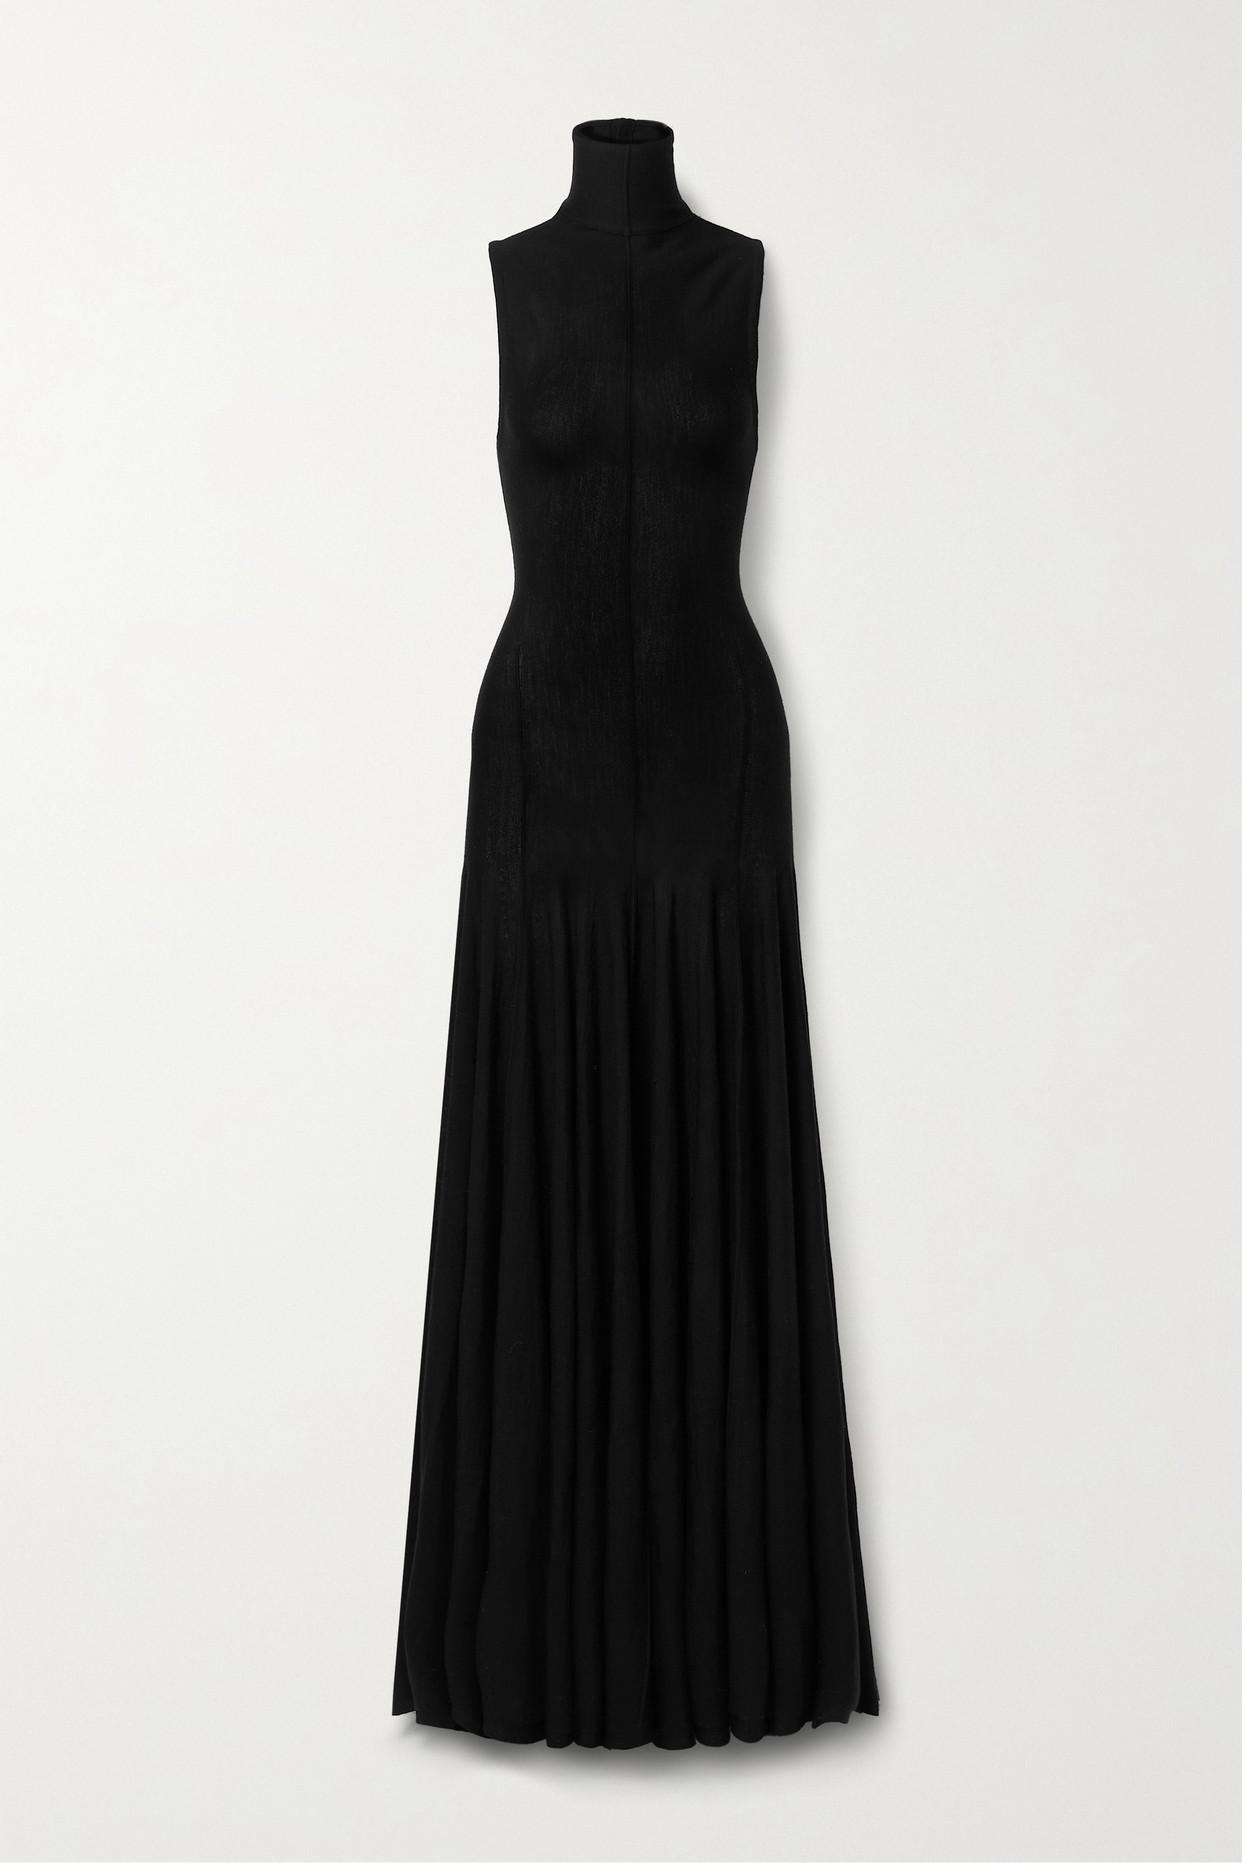 Khaite Romee Open-back Draped Merino Wool Maxi Dress in Black | Lyst